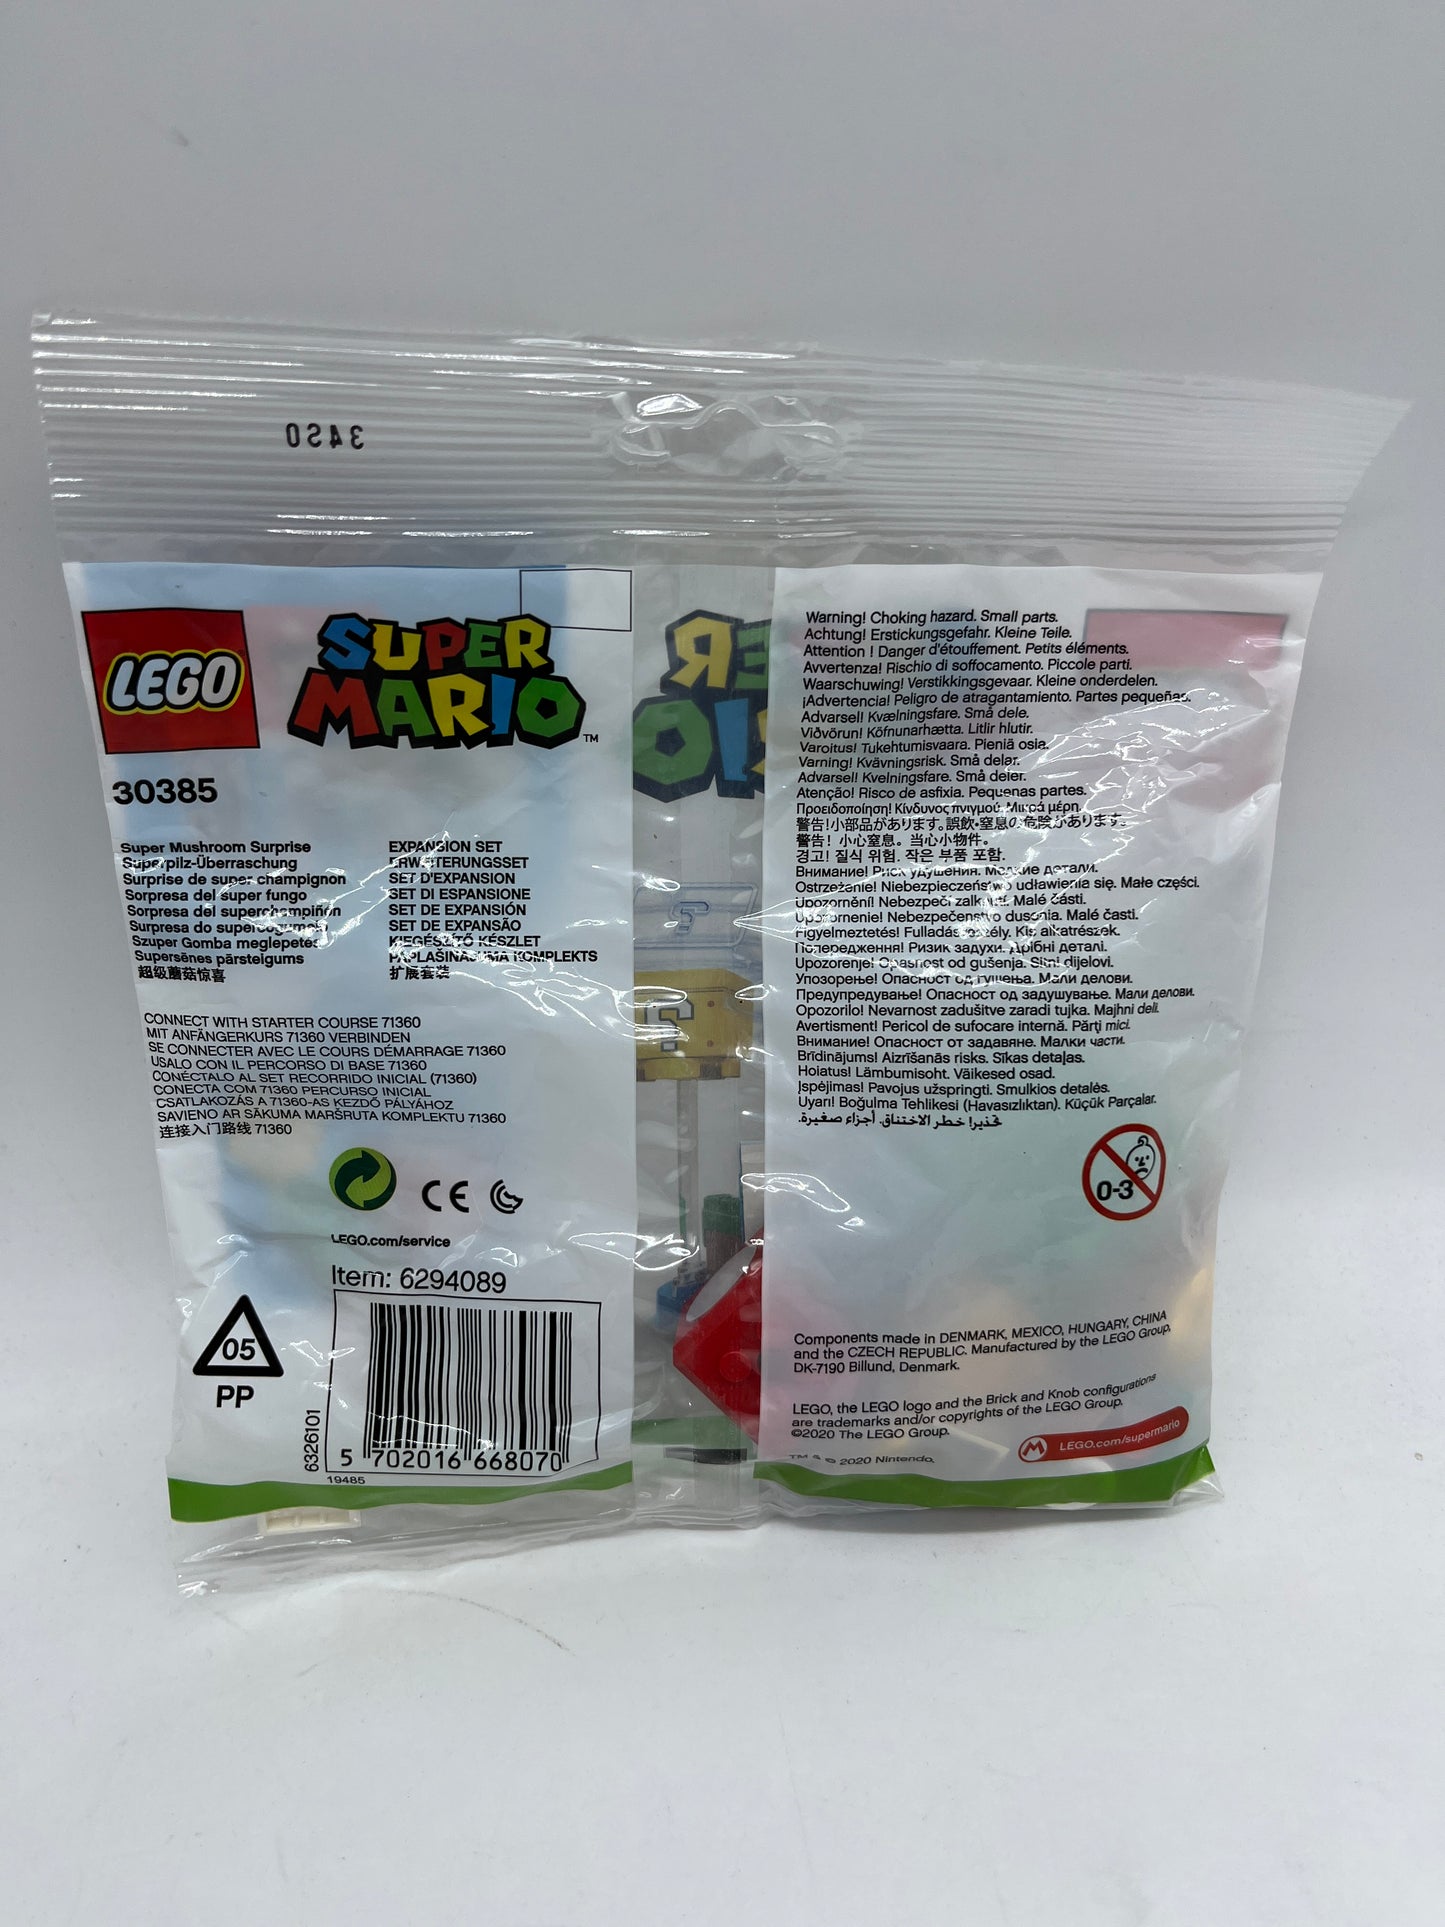 Sachet polybag Lego Super Mario Neuf Super Mushroom Surprise 30385